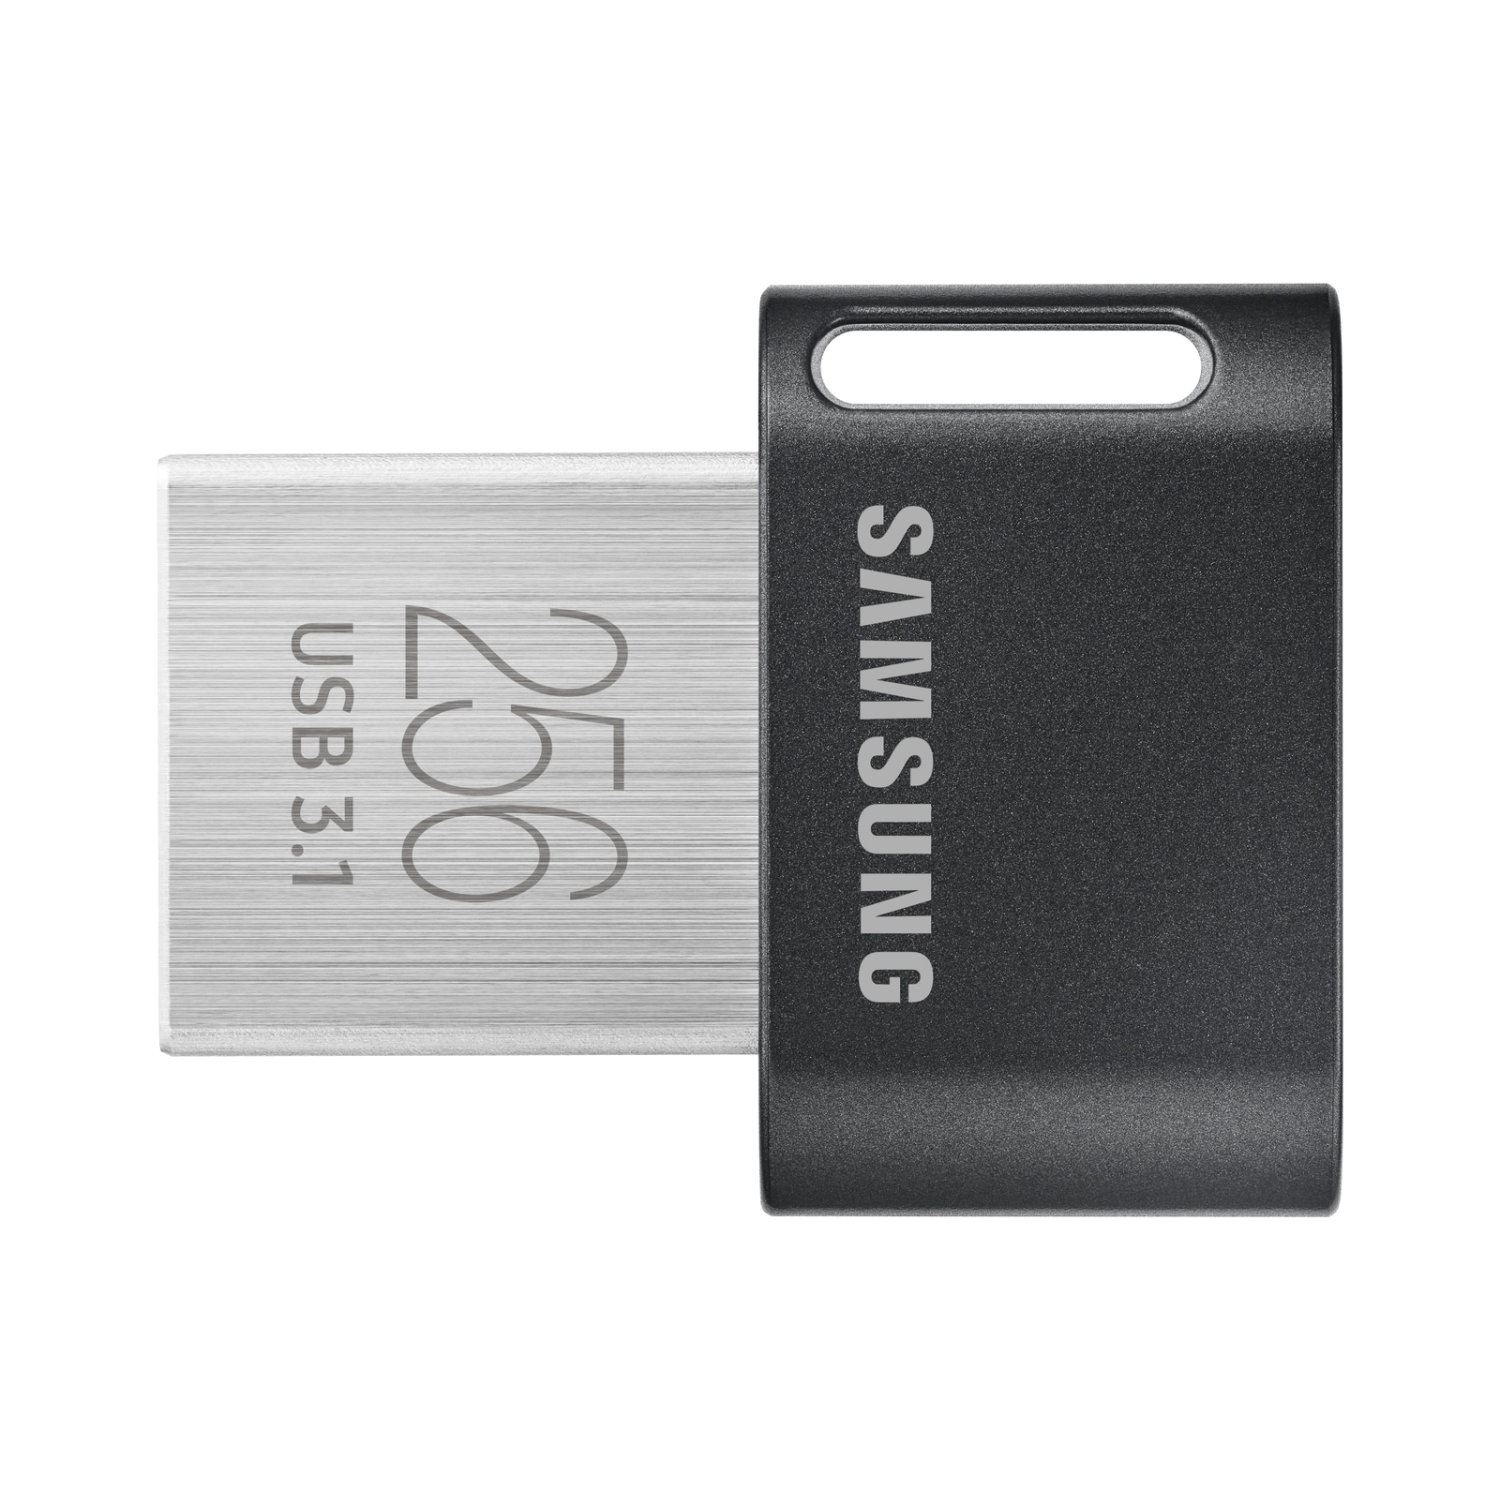 Samsung FIT Plus 256GB USB 3.1 Flash Drive up to 400MB/s (MUF-256AB)